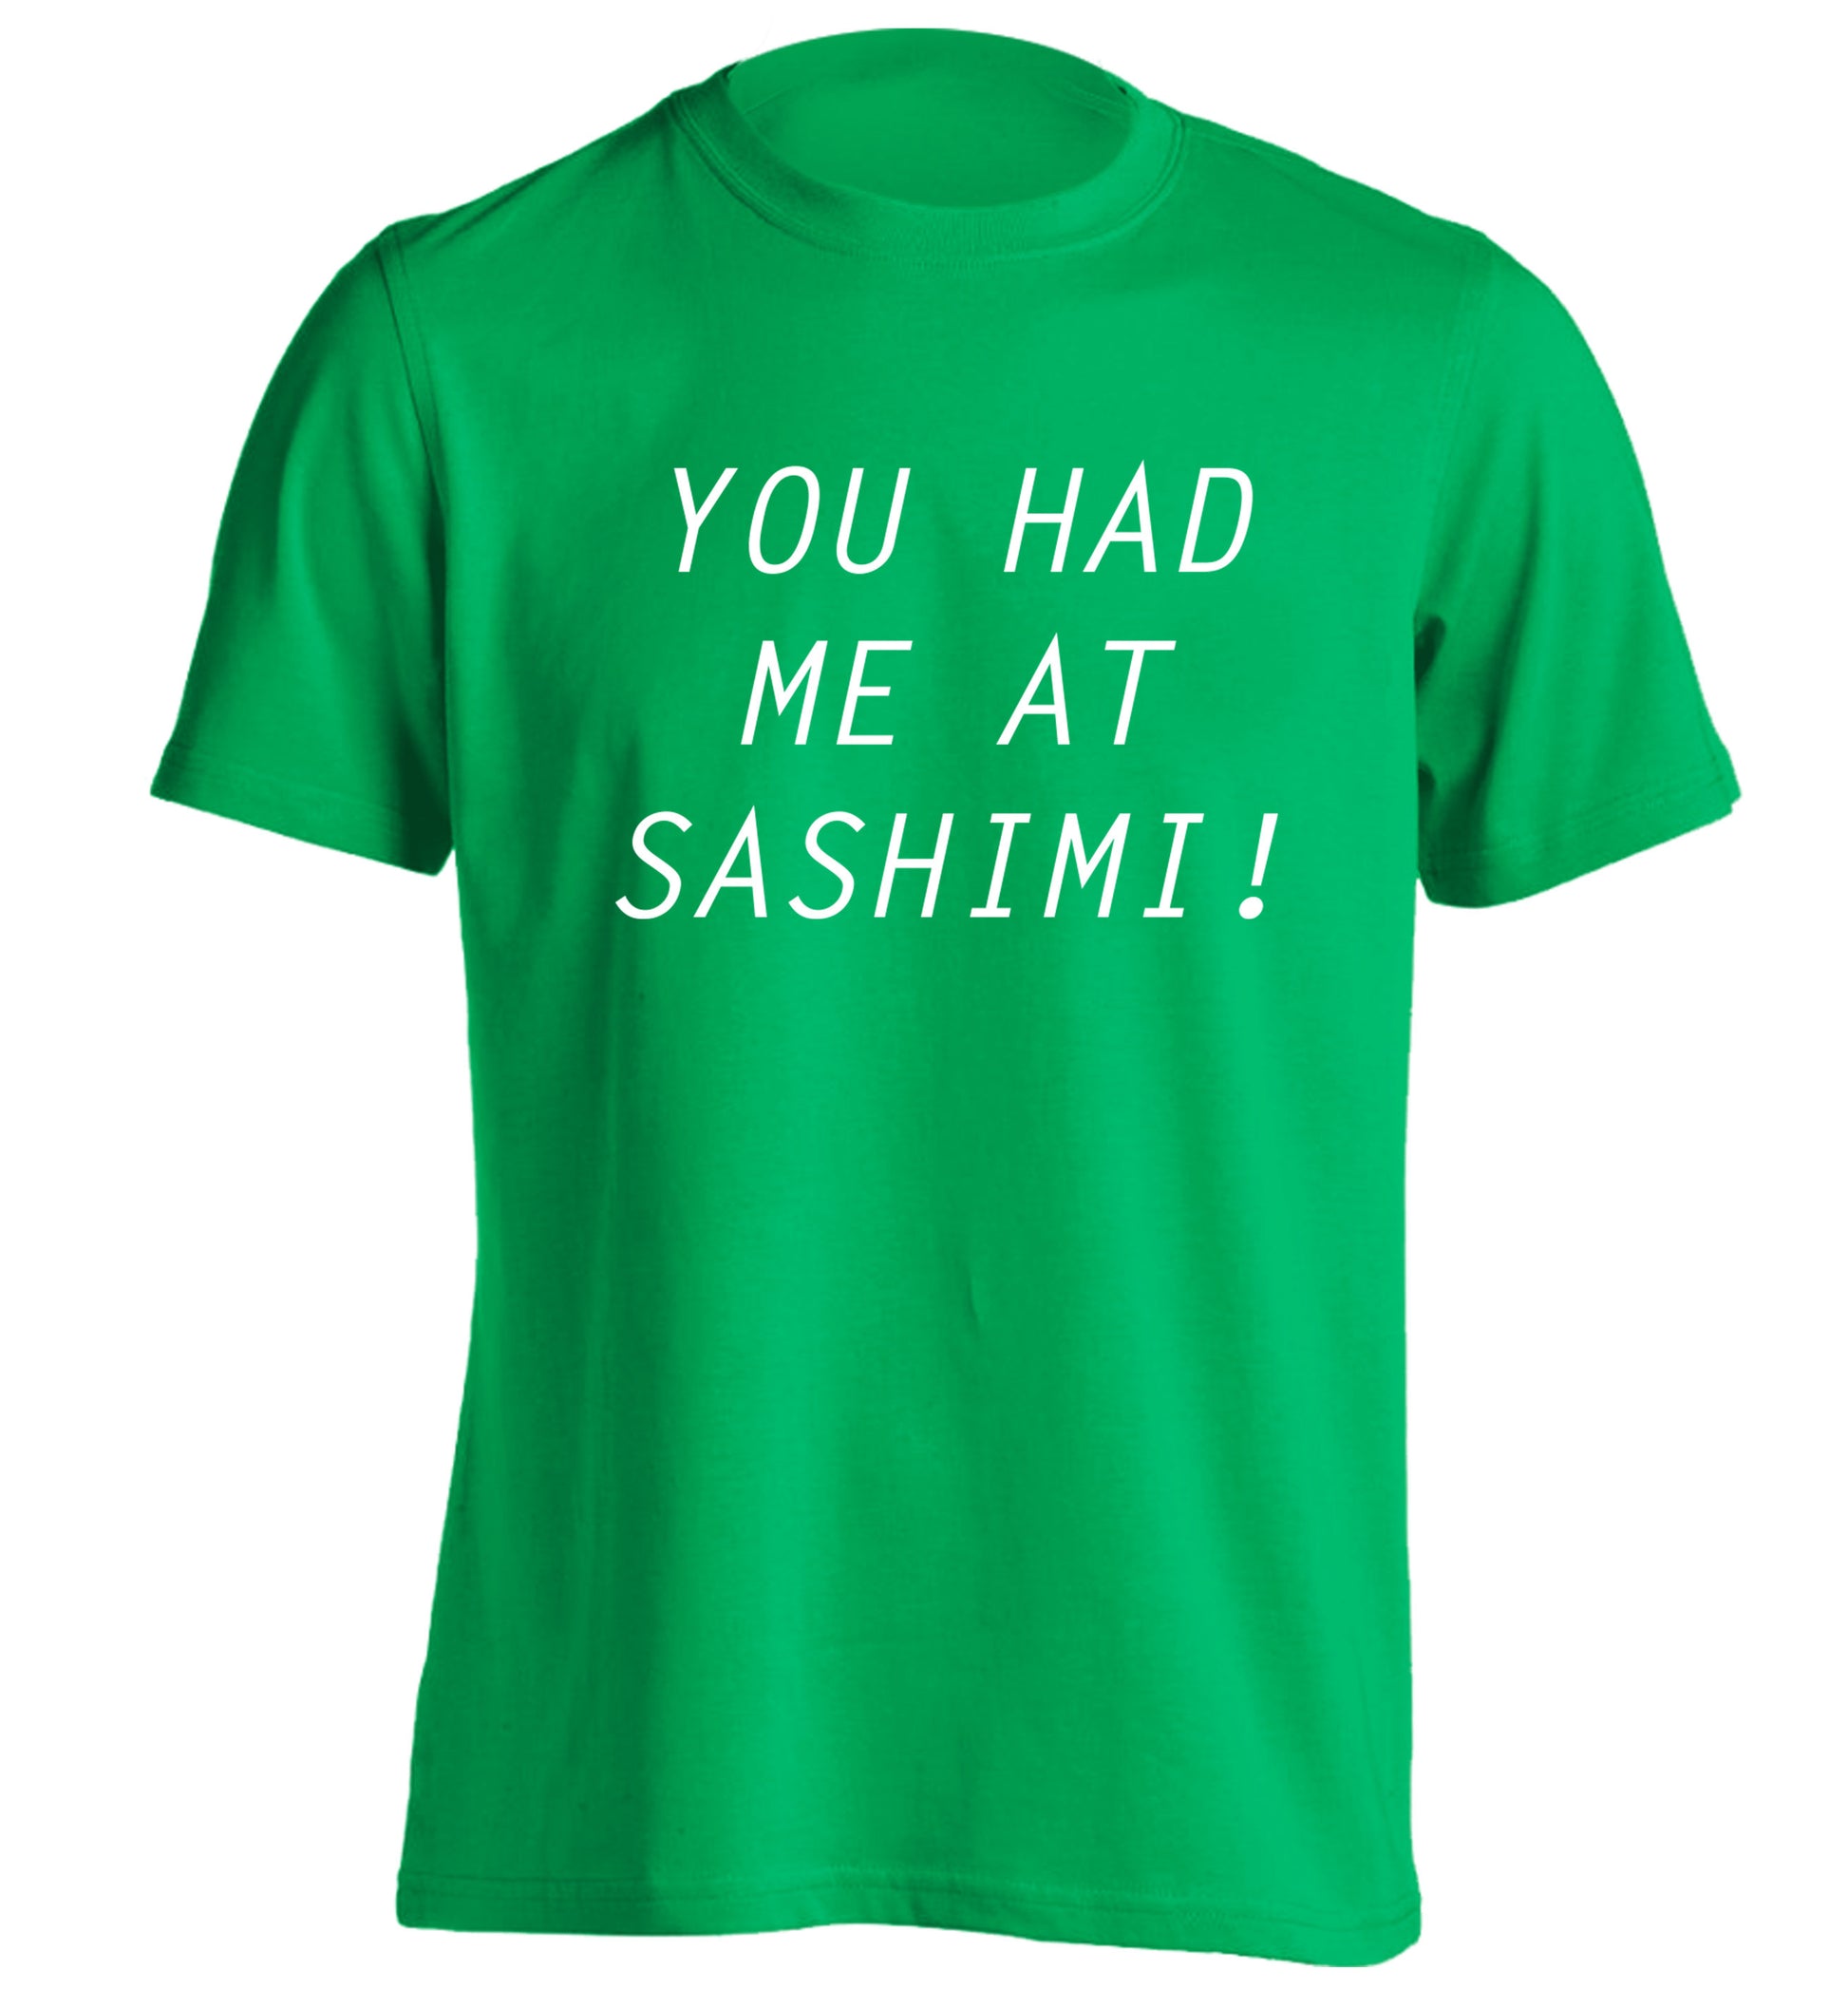 You had me at sashimi adults unisex green Tshirt 2XL